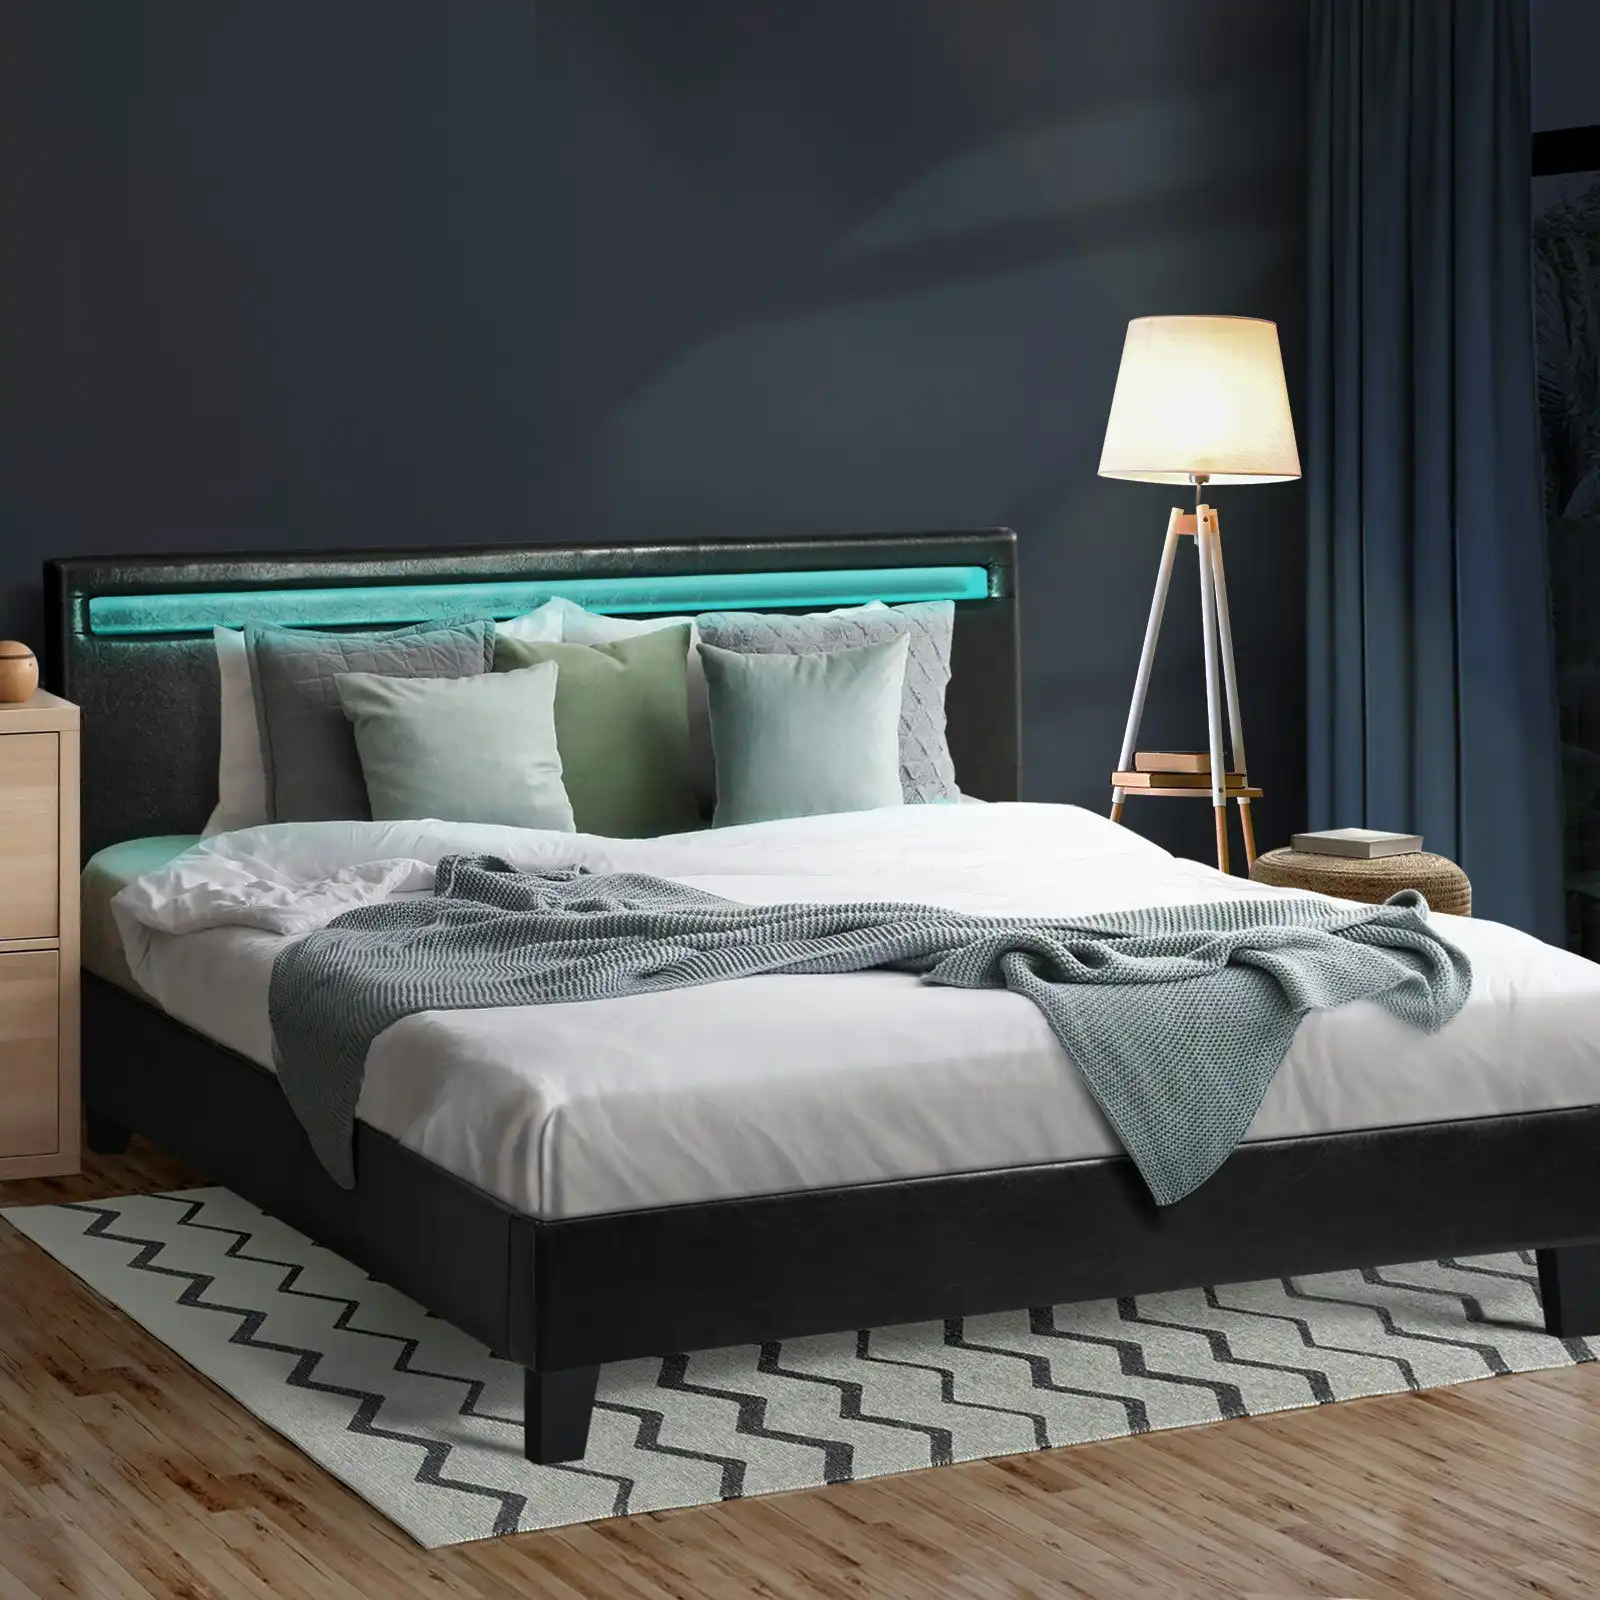 Oikiture Bed Frame RGB LED Queen Size Mattress Base Platform Wood Slat Leather